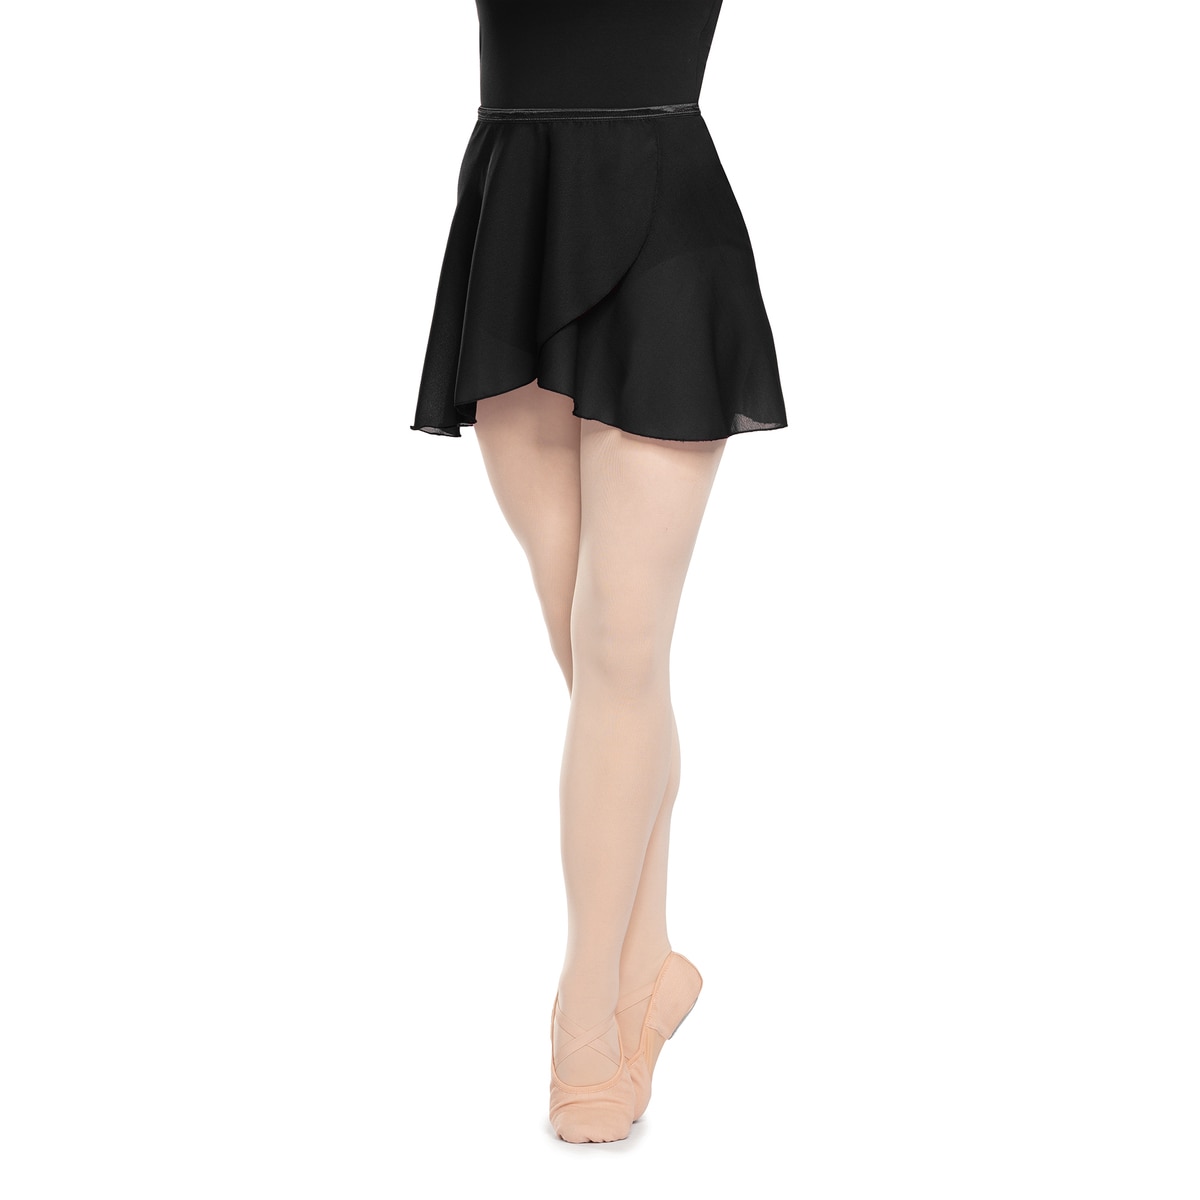 https://summitschoolofdance.com/wp-content/uploads/2020/06/Black-Wrap-Skirt.jpg